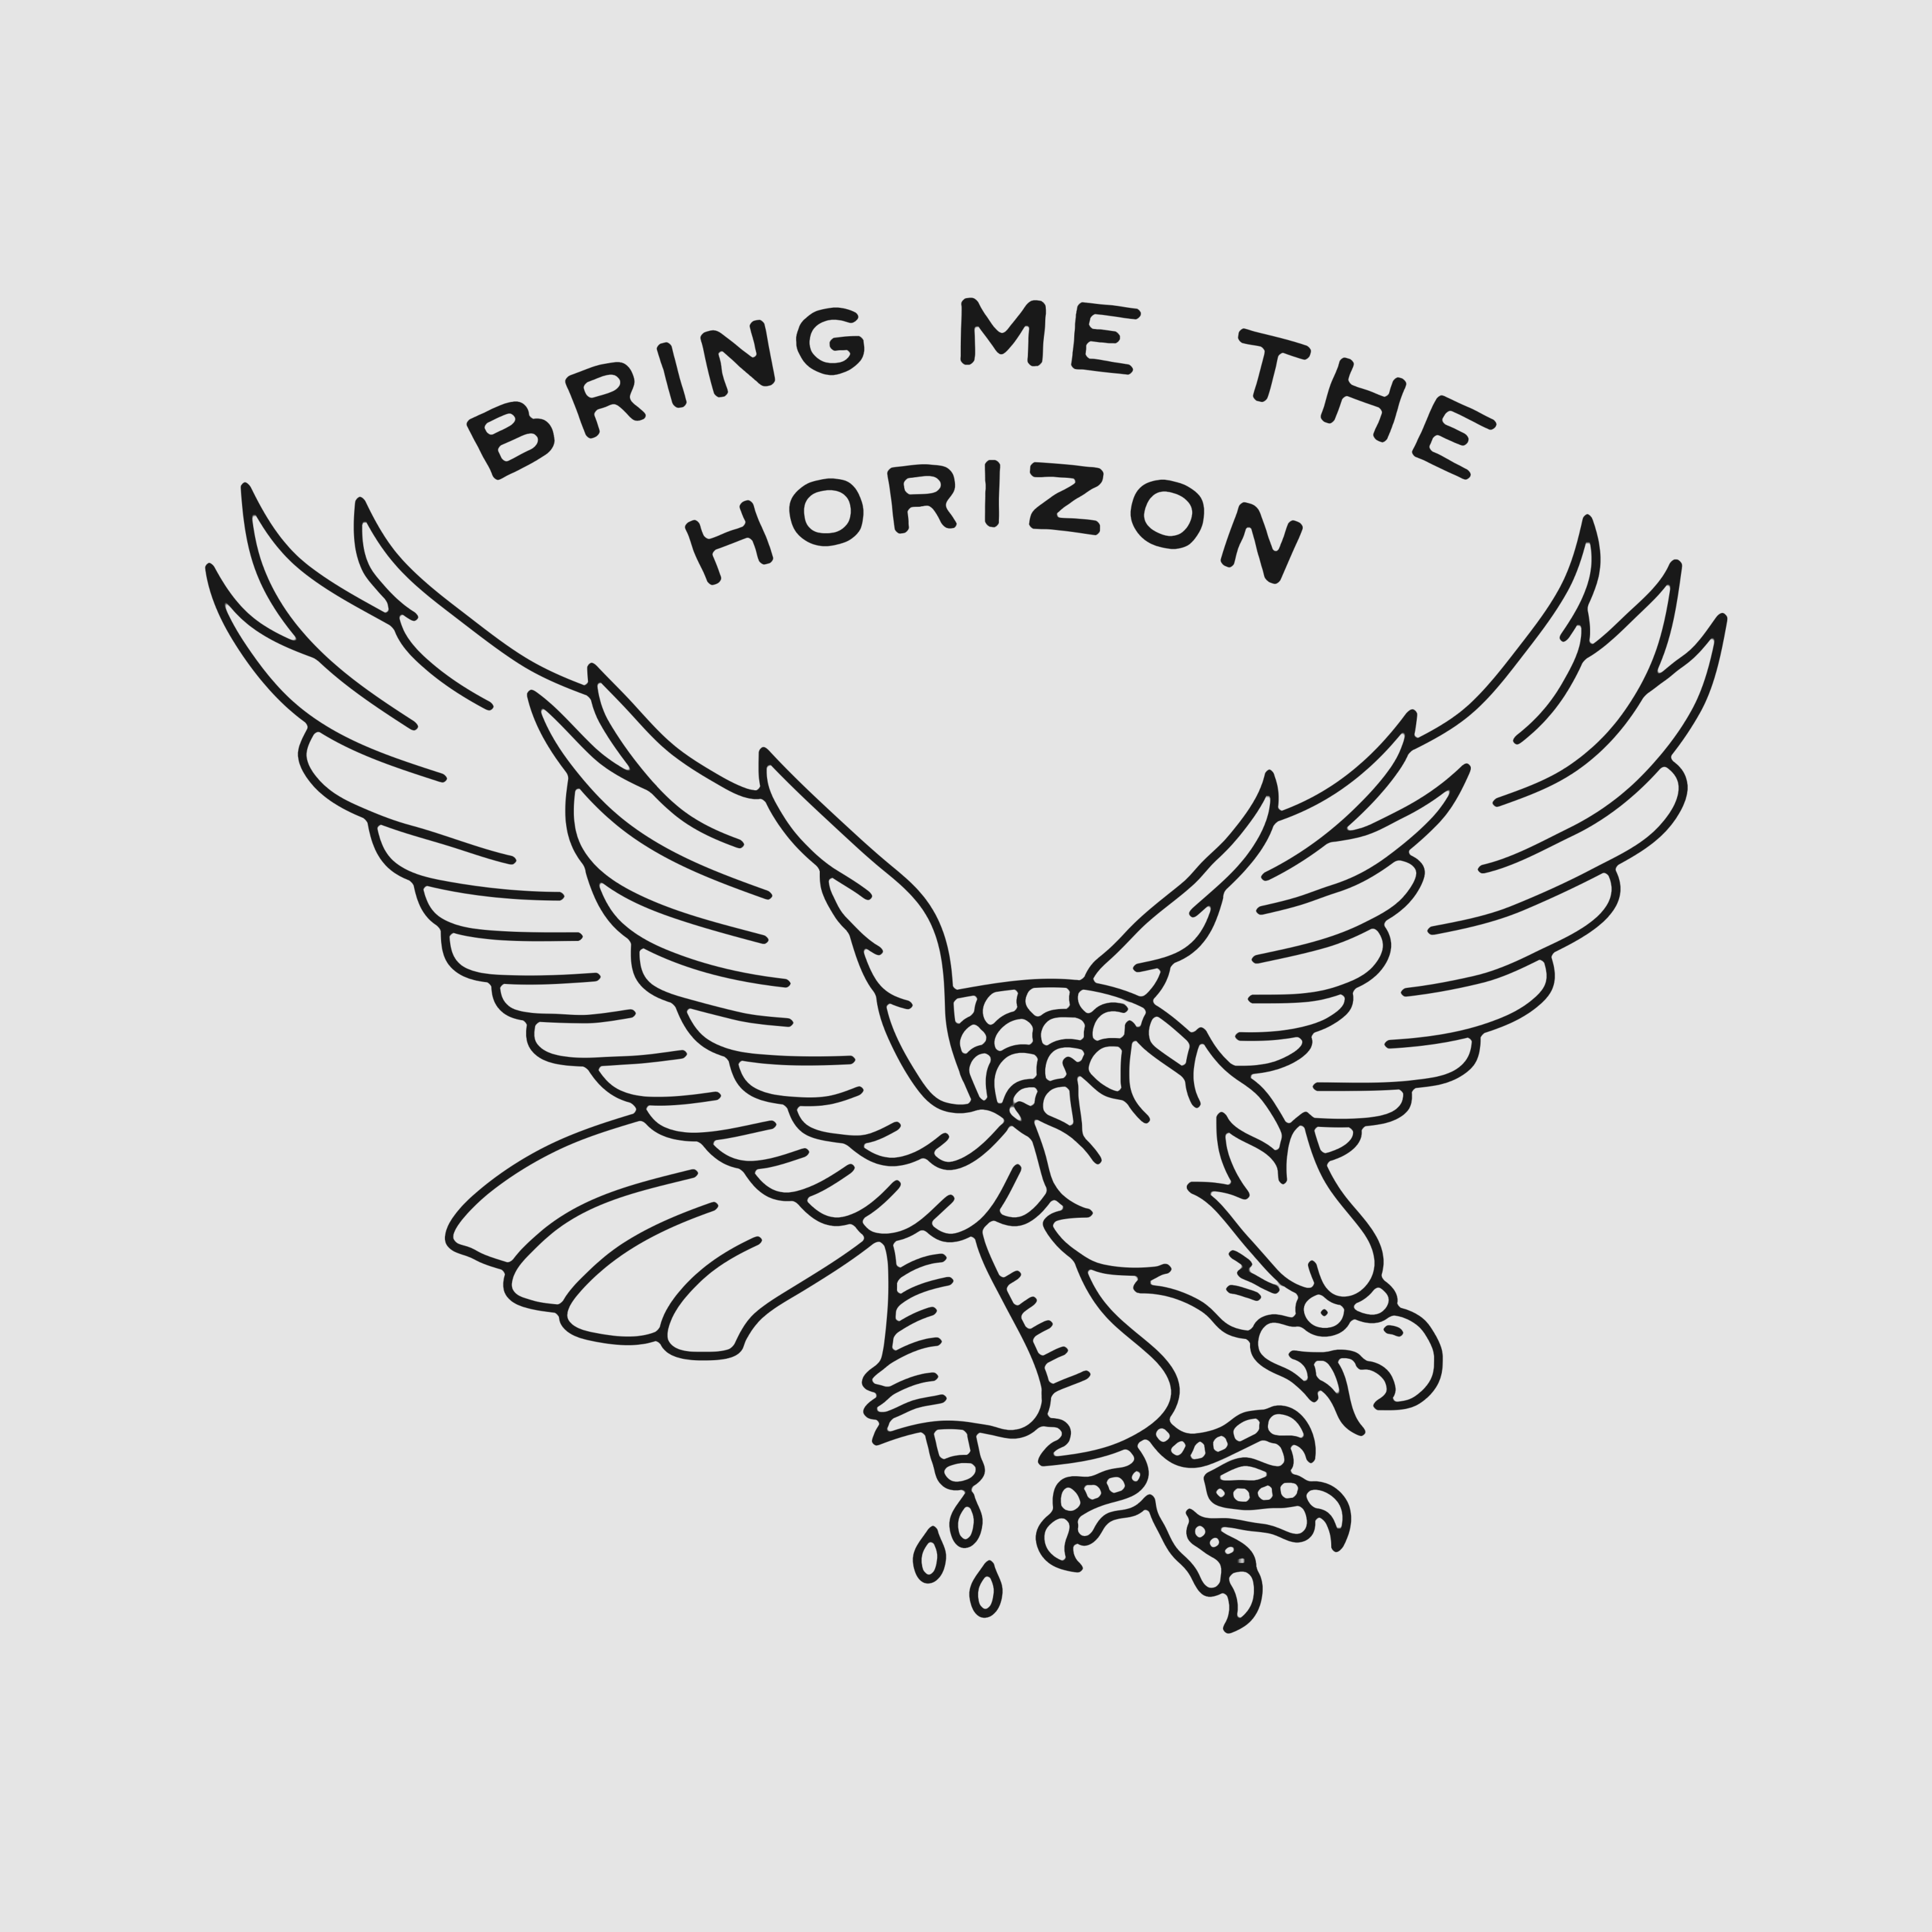 Bring Me The Horizon - Album Merchandise & Lyric Video (That's The Spirit)